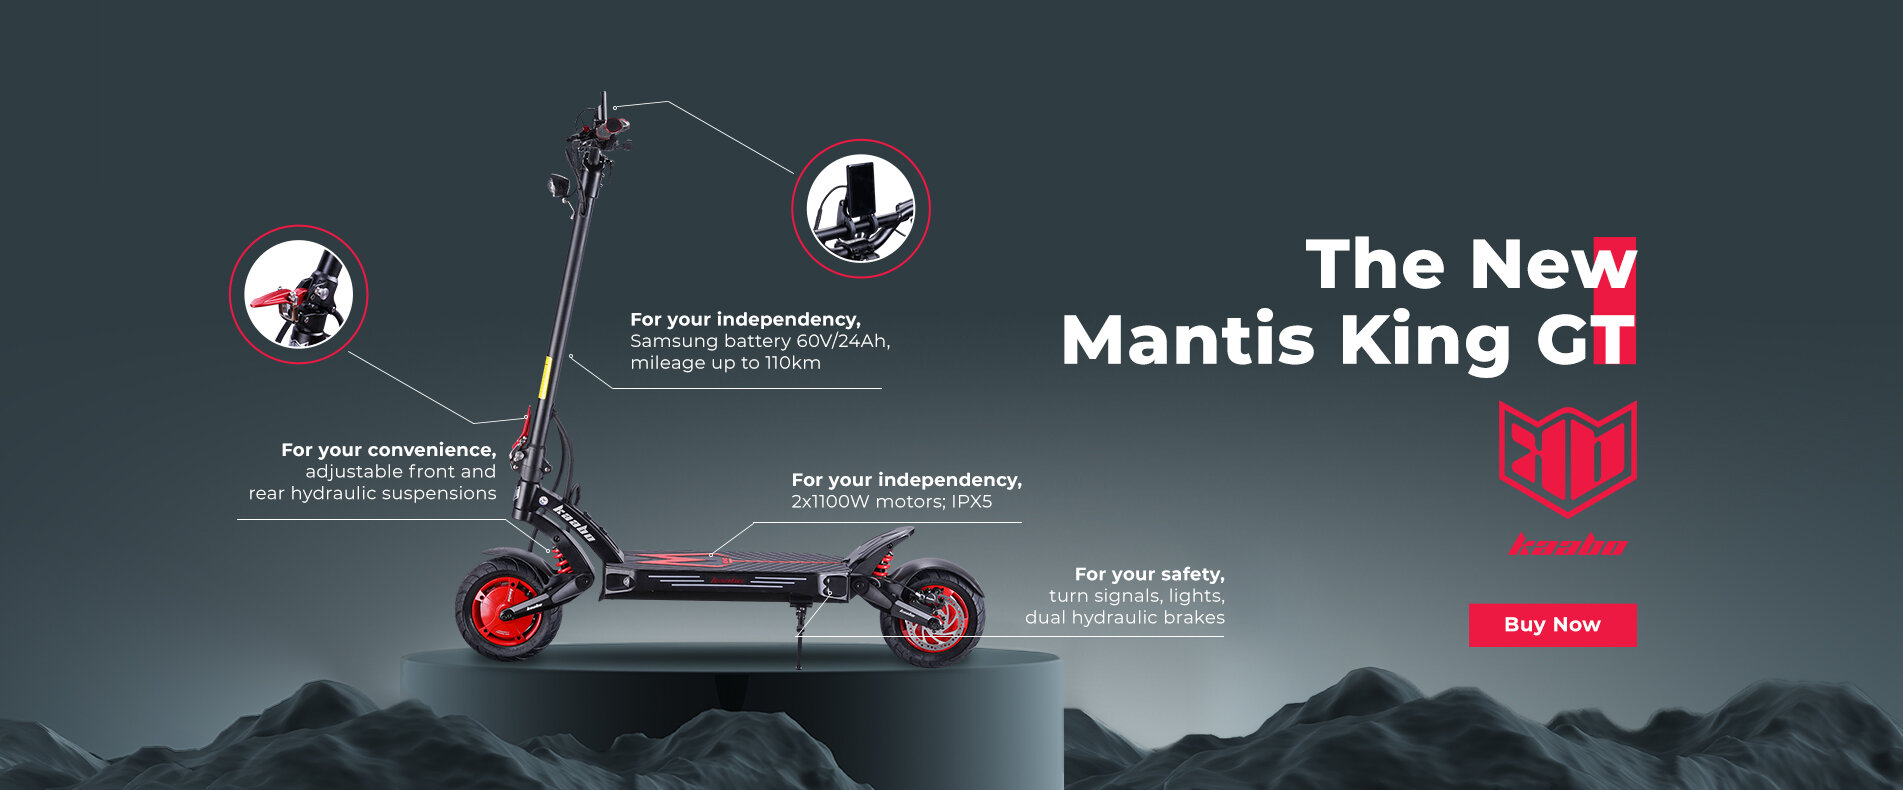 11) The new mantis GT